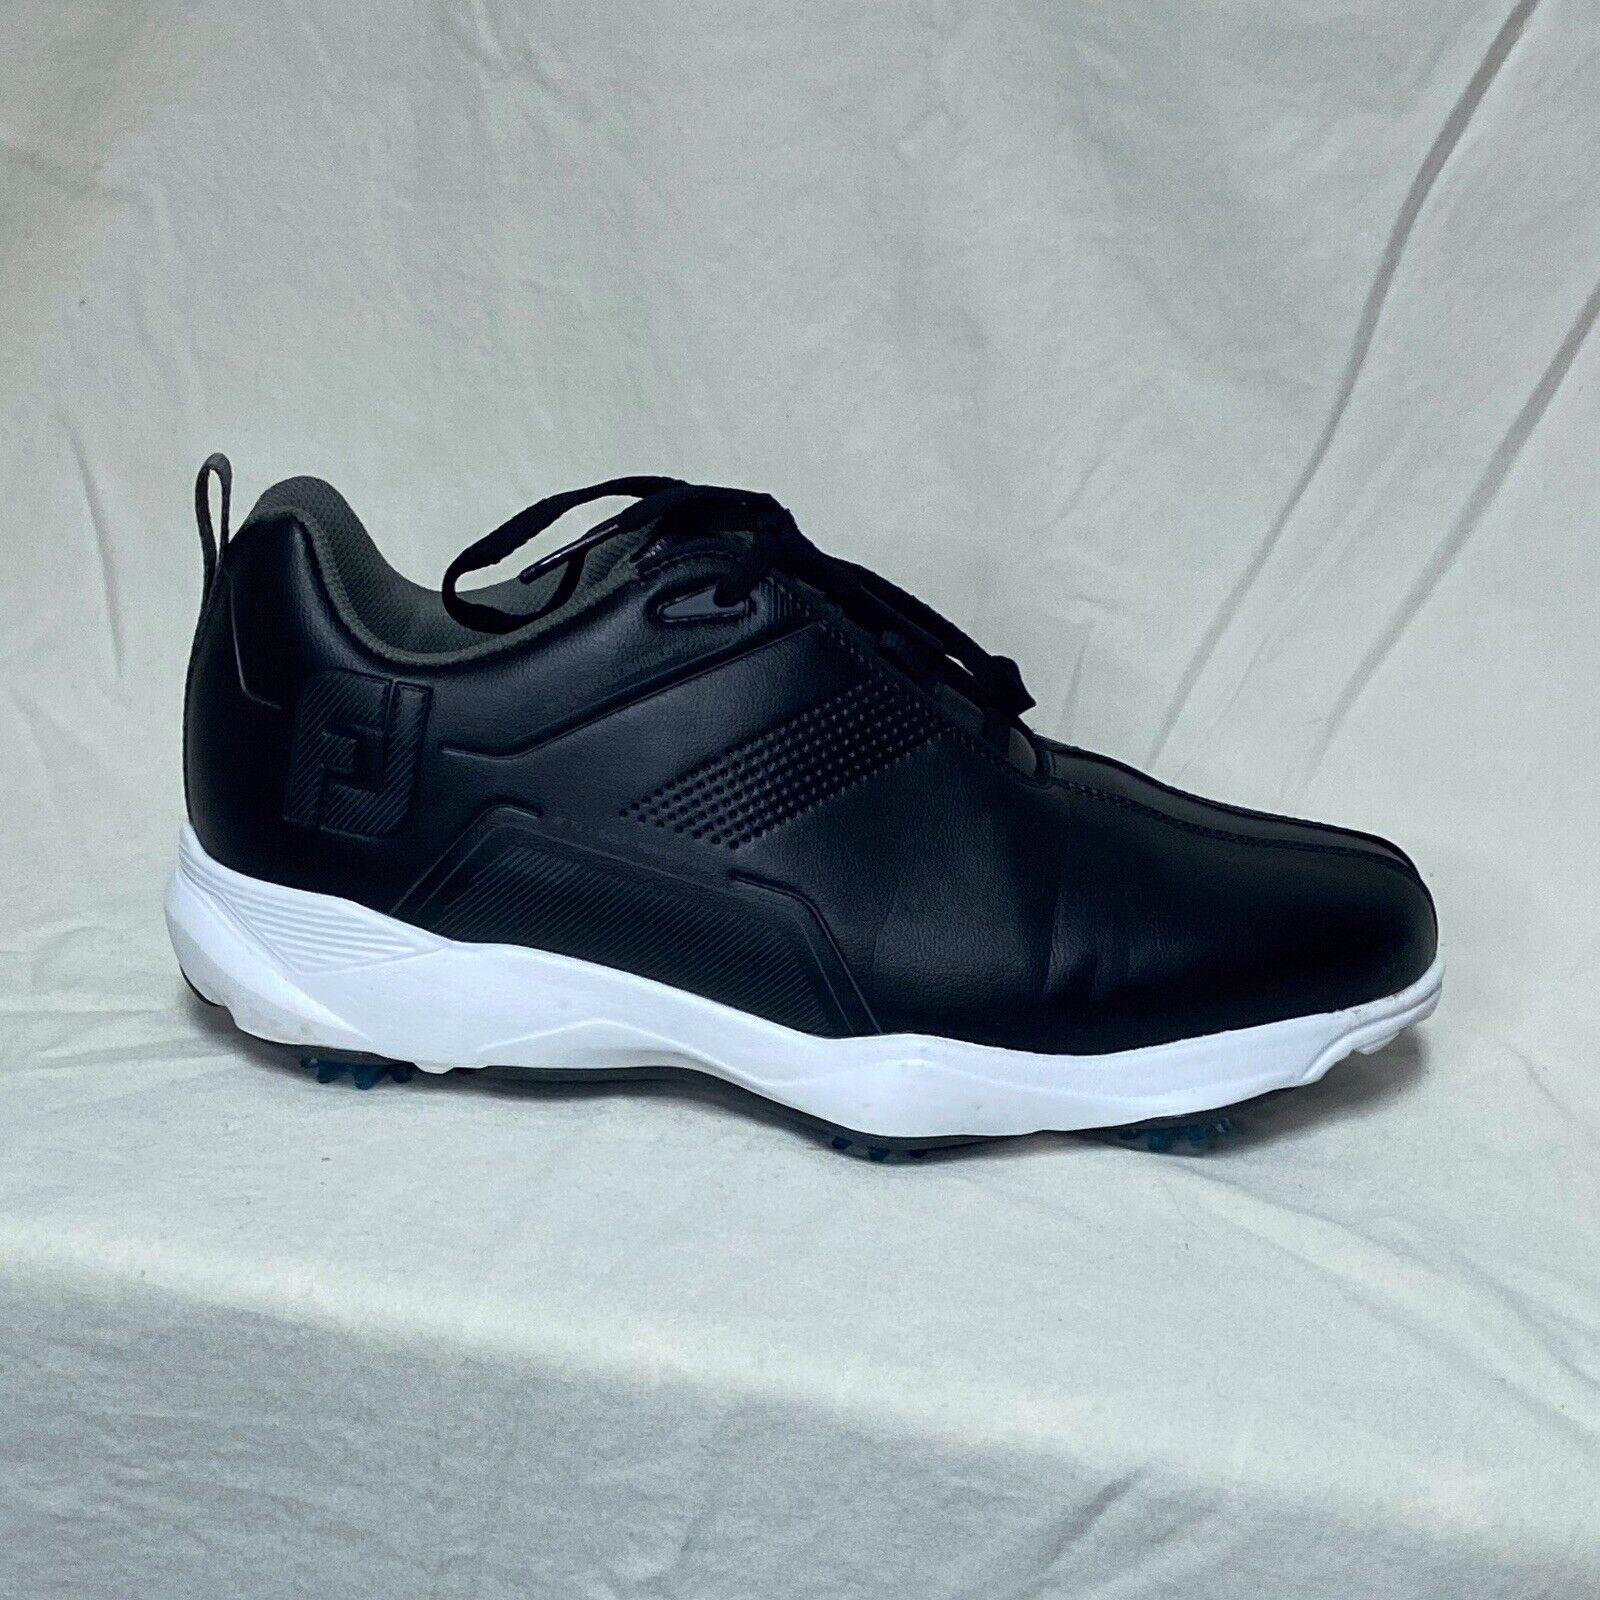 FOOTJOY eCOMFORT Men’s Golf Shoes Color BLACK Size 10.5W / 57700